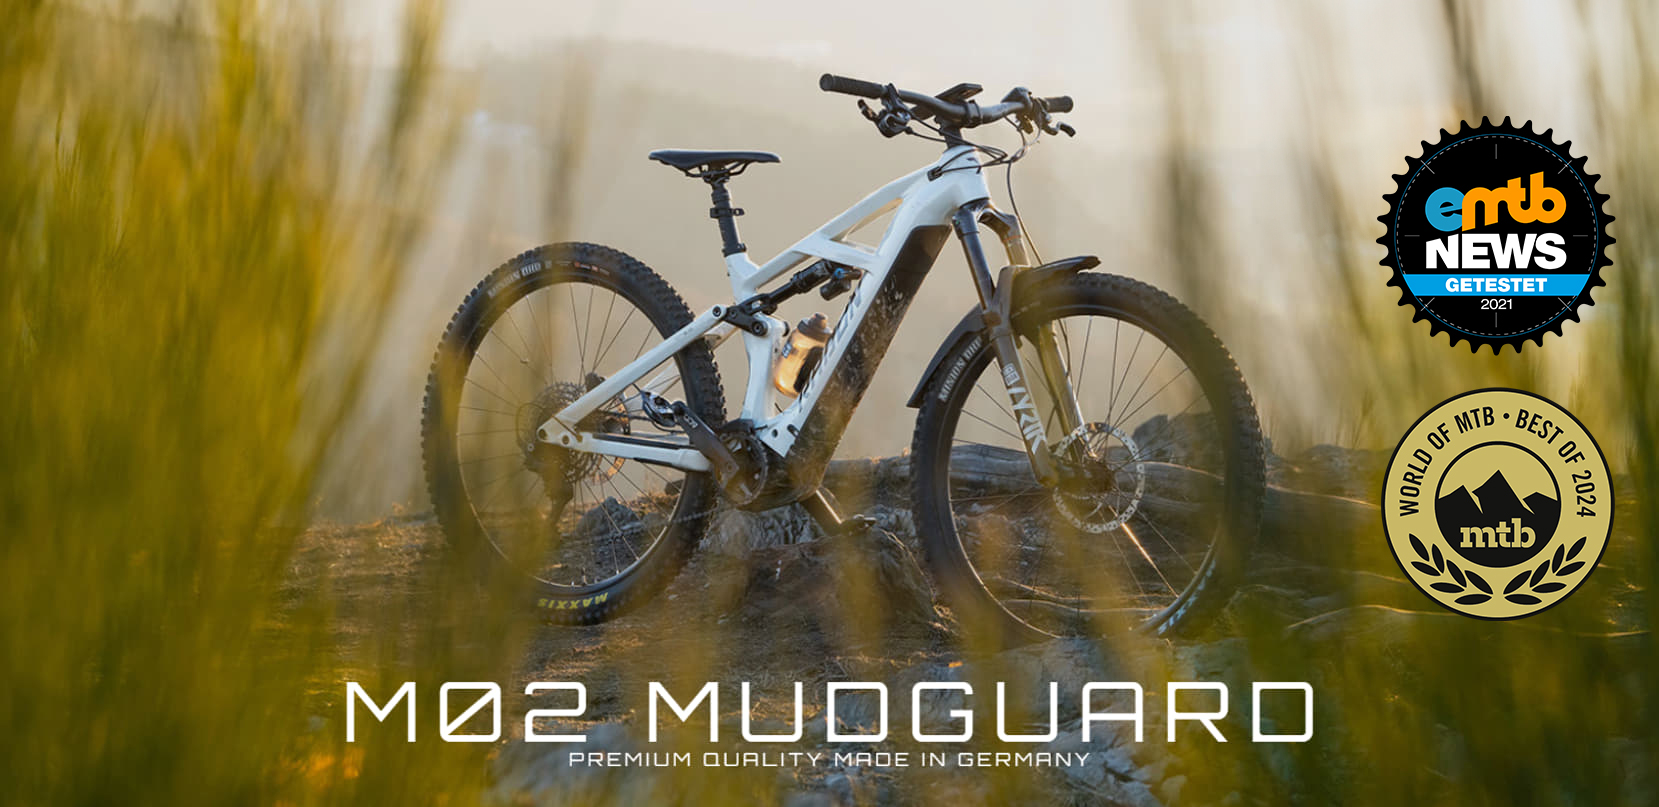 Unleazhed M02 Mountainbike Mudguard